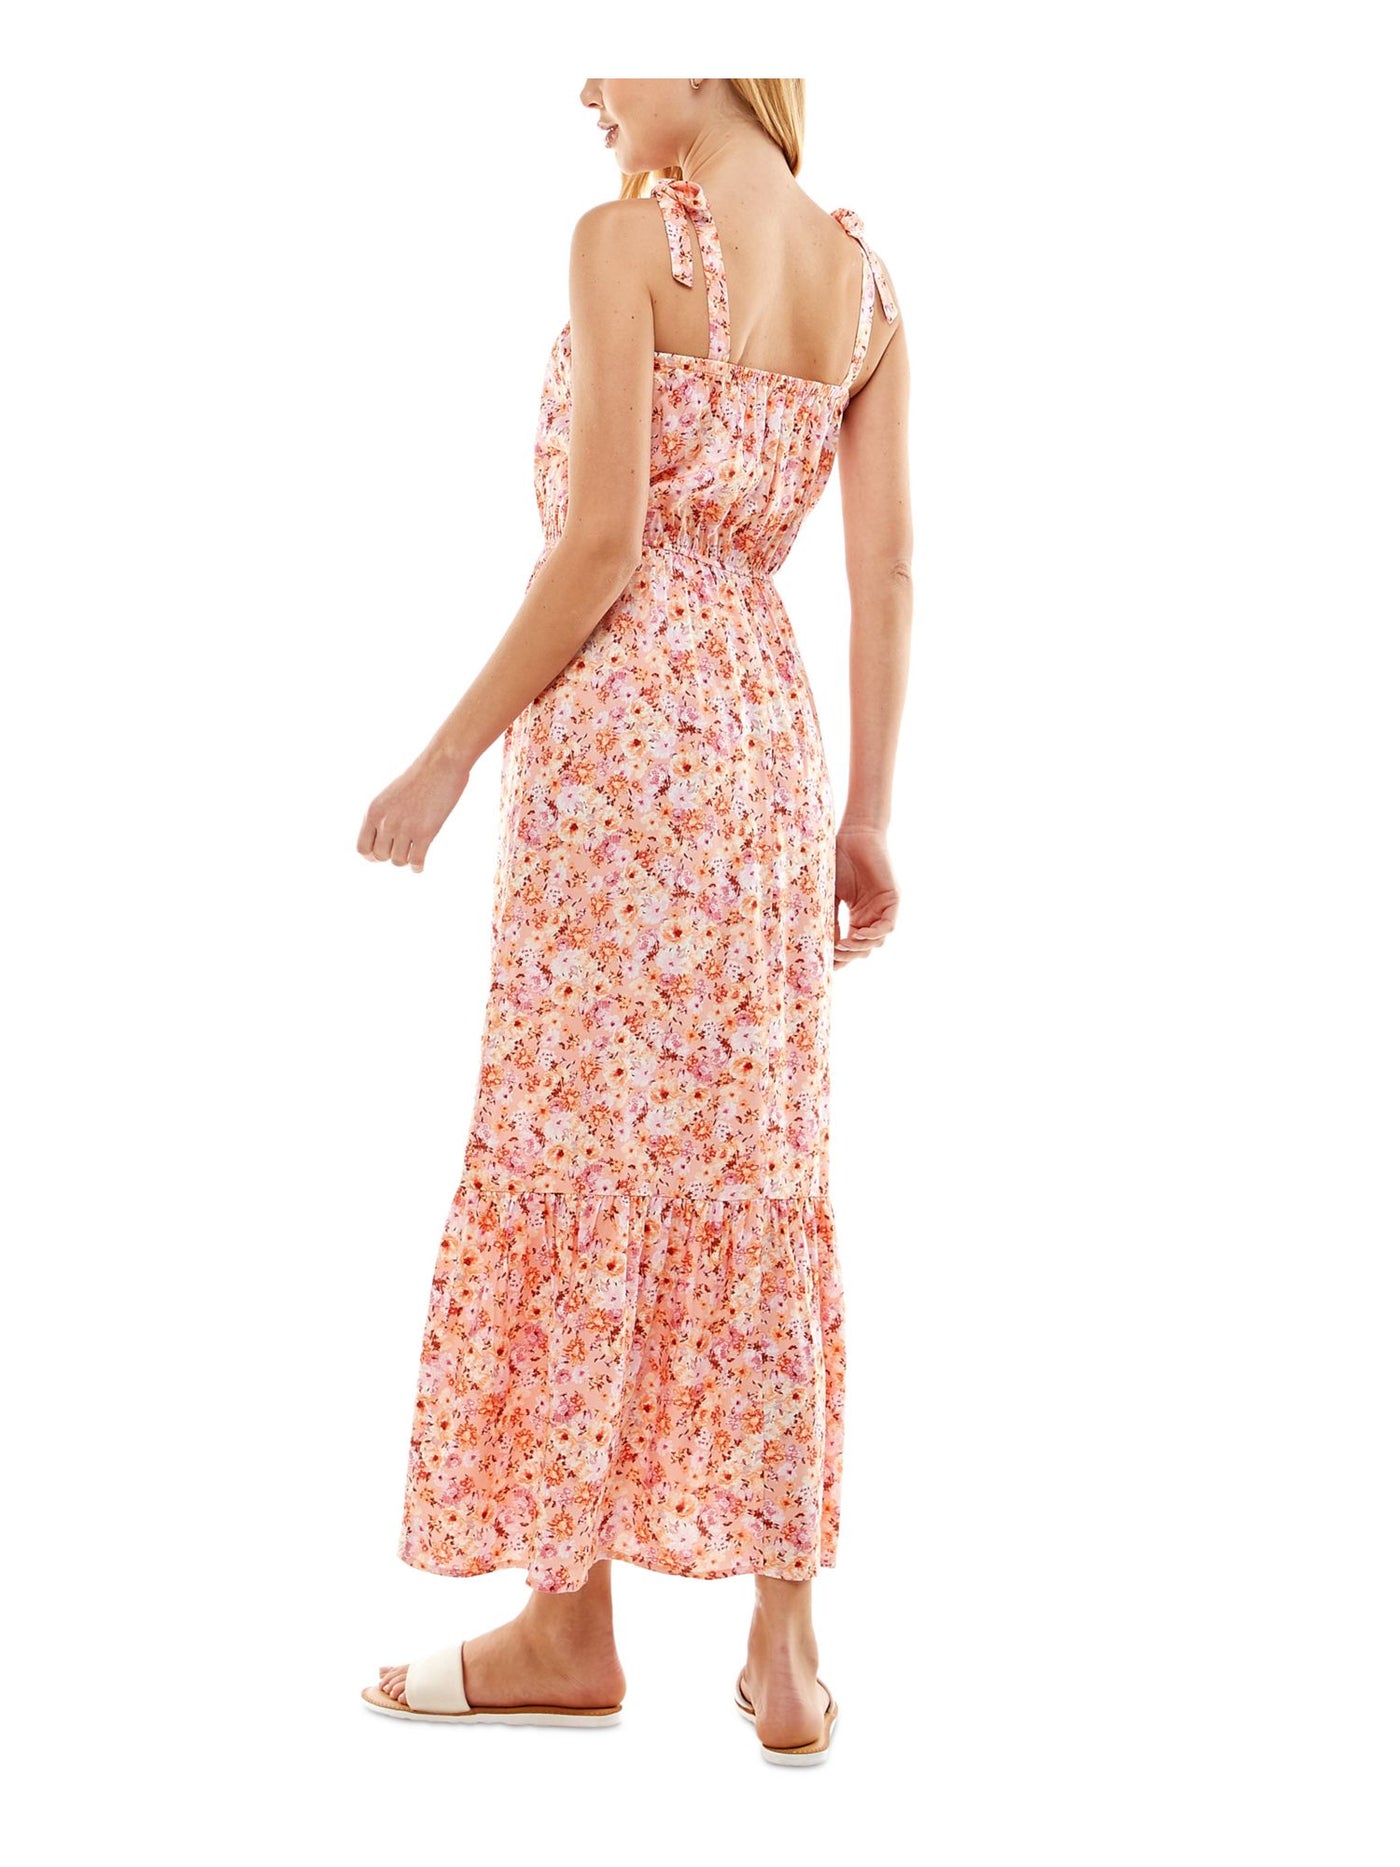 KINGSTON GREY Womens Orange Tie Floral Sleeveless Square Neck Maxi Fit + Flare Dress XL